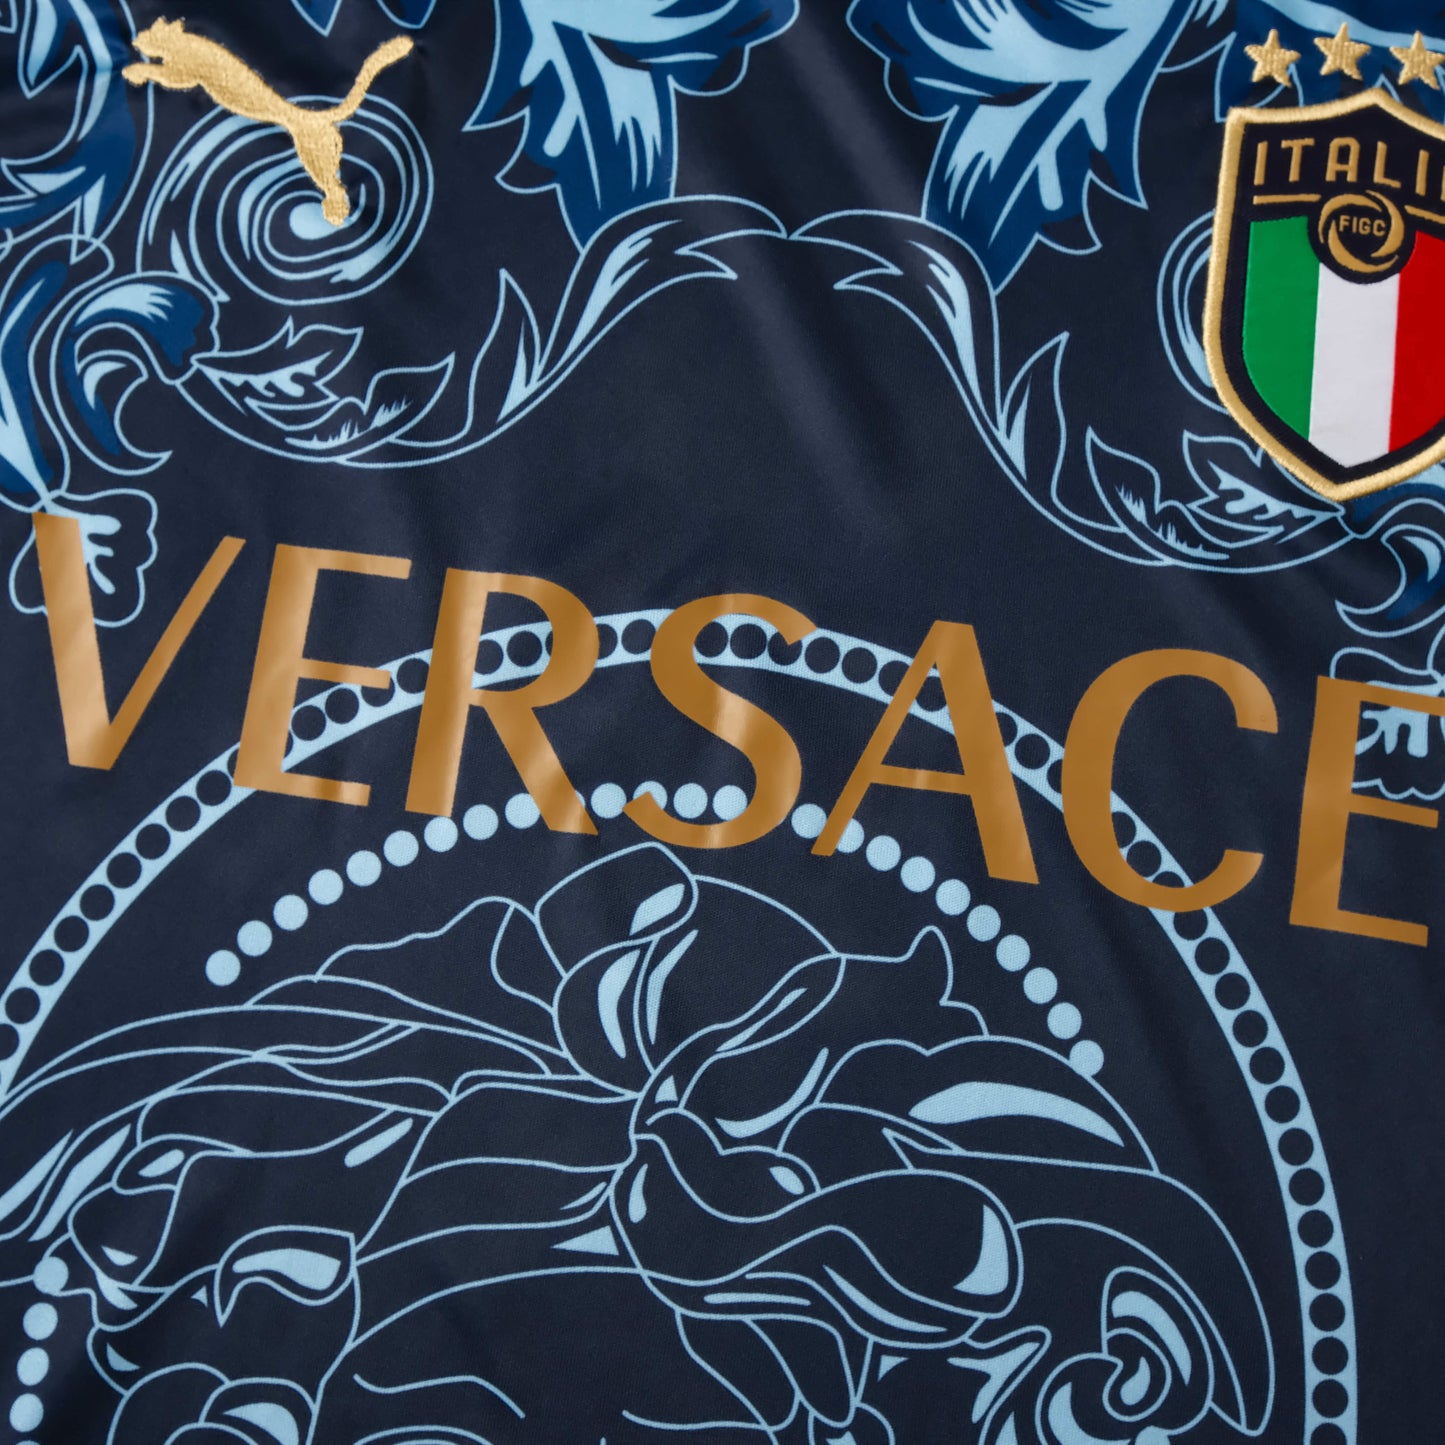 Italy 23/24 "Blue Versace" Jersey